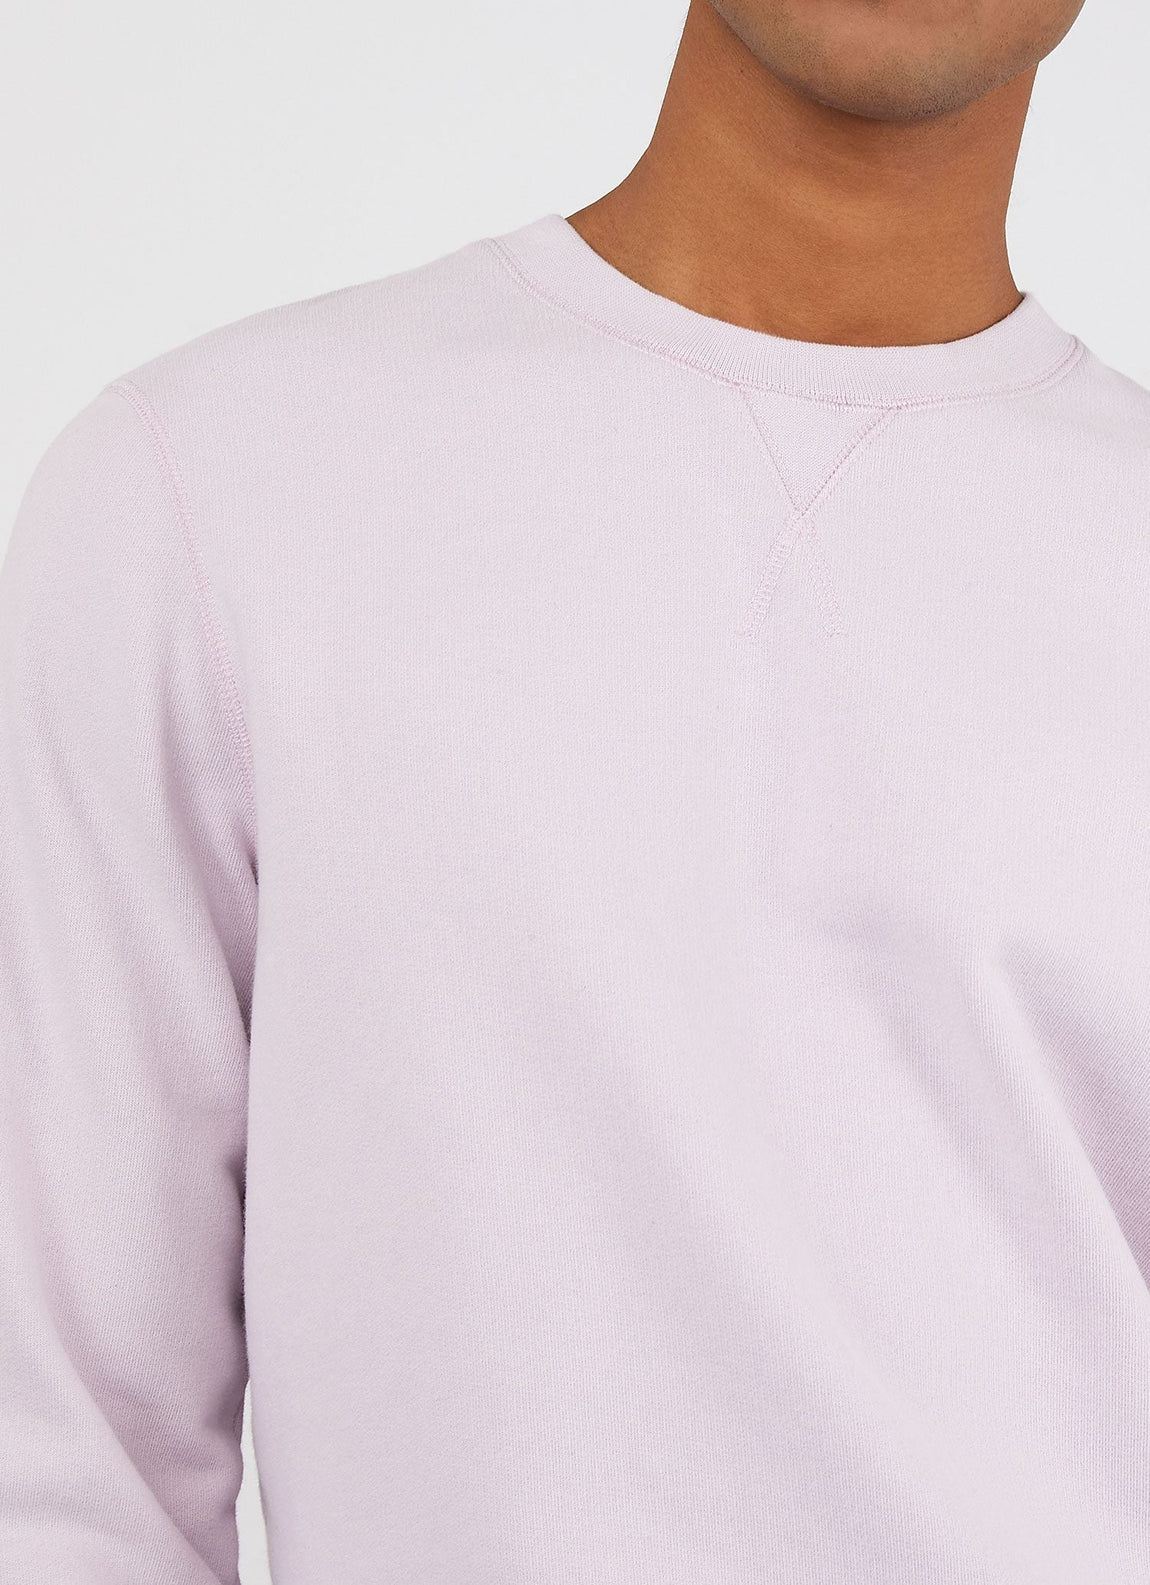 Men's Loopback Sweatshirt in Lilac